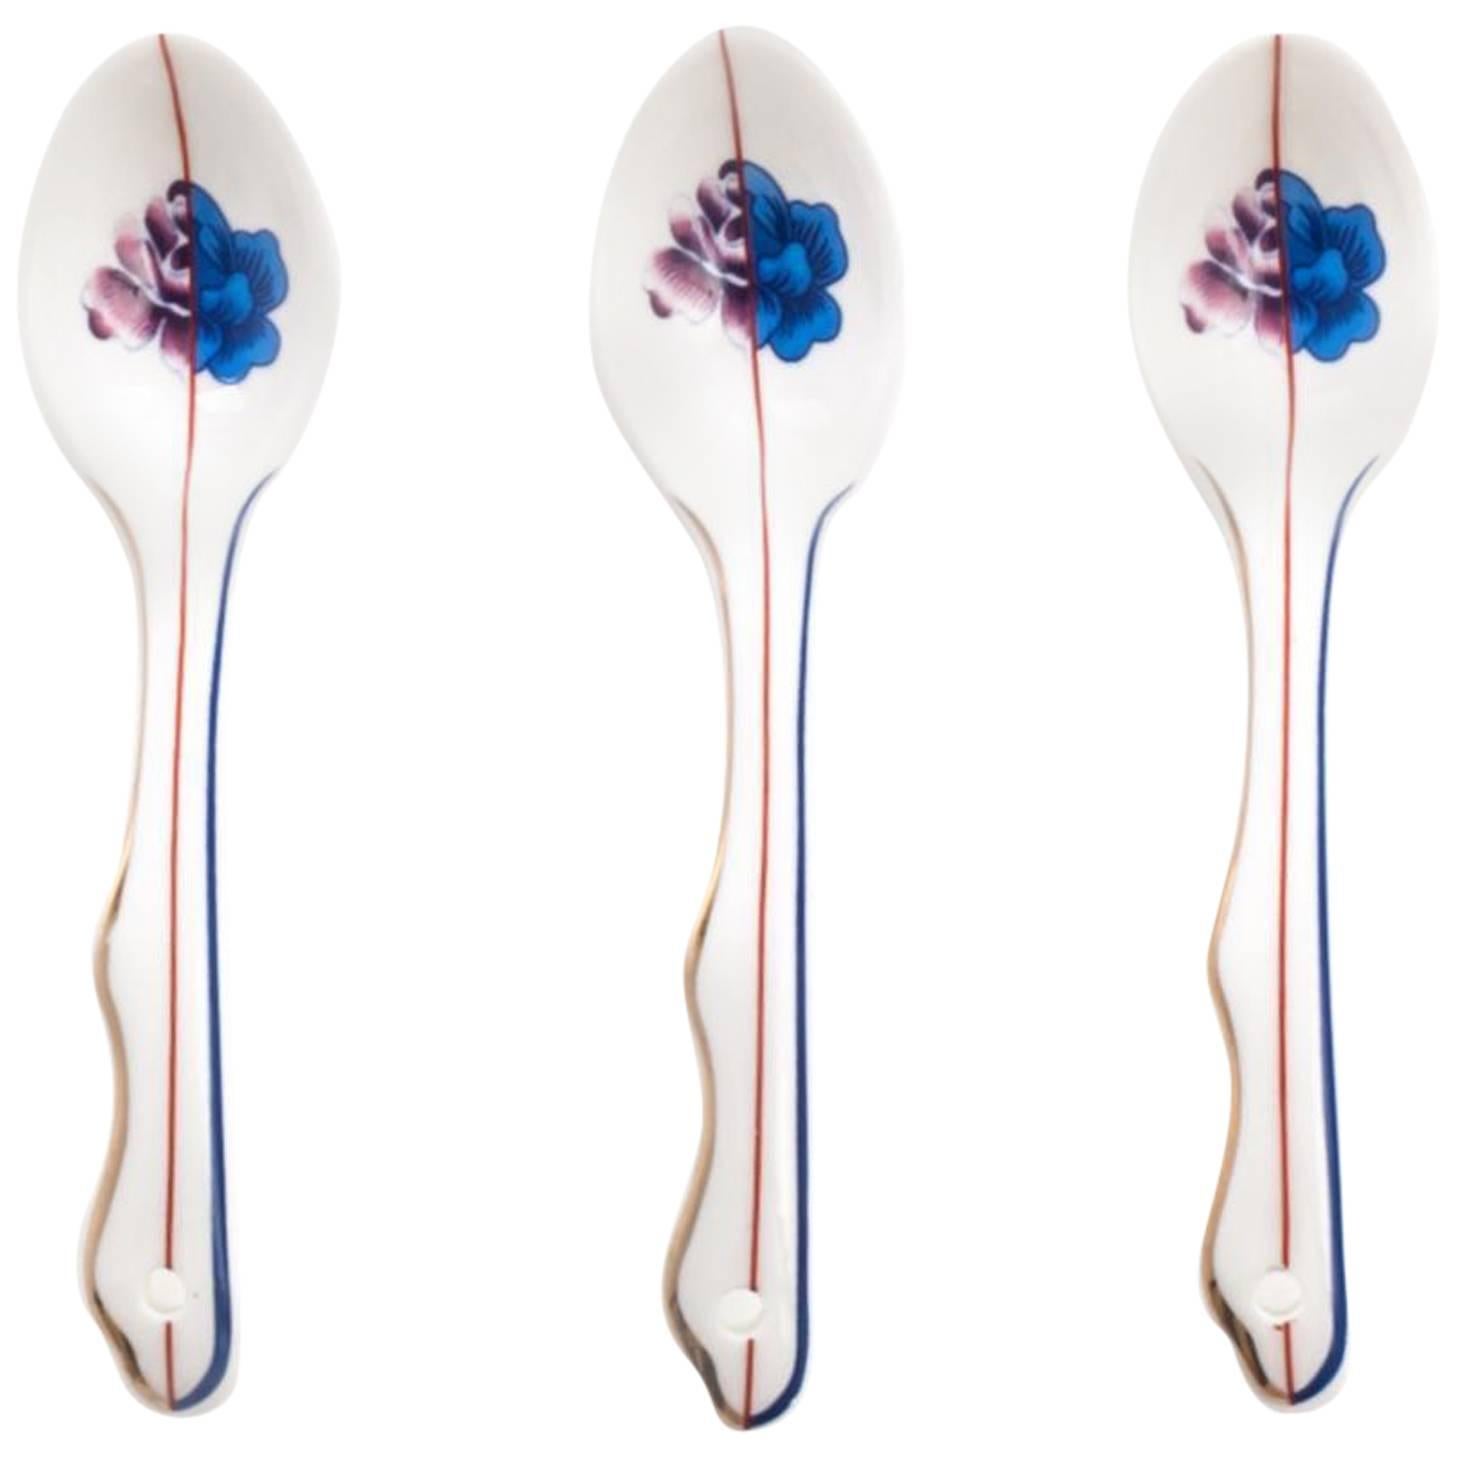 Seletti "Hybrid-Armilla" Porcelain Spoon, Three Pieces For Sale